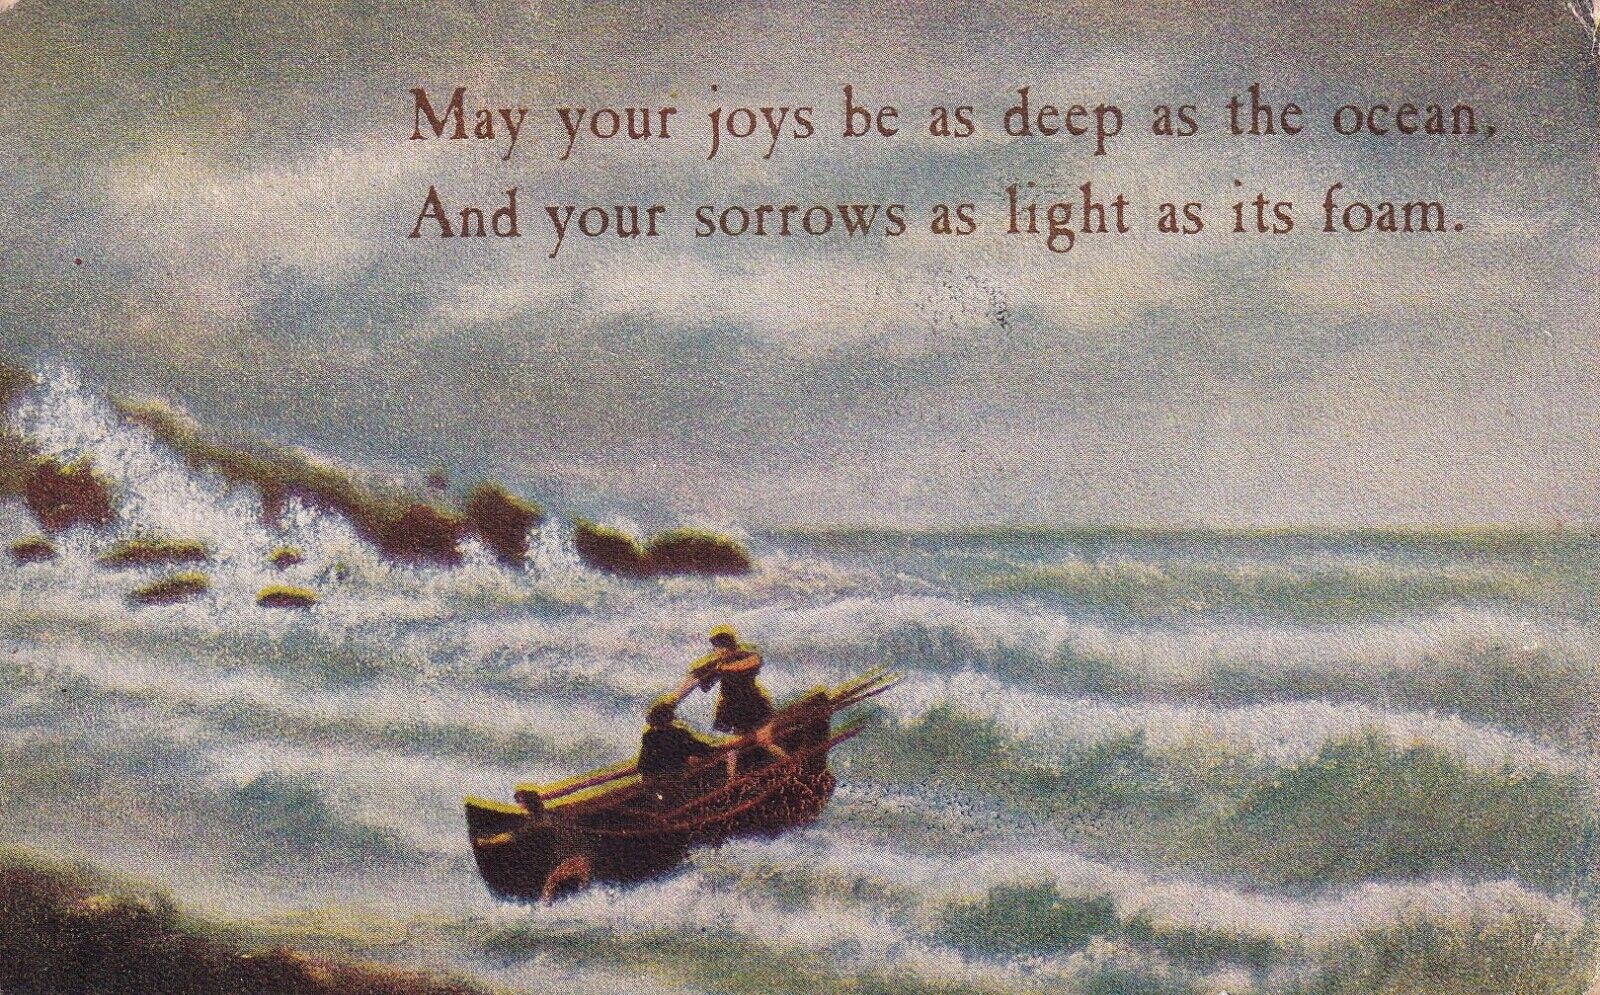 c1912 Boat 2 Men in Ocean Greeting Inspirational Hammond Press Postcard